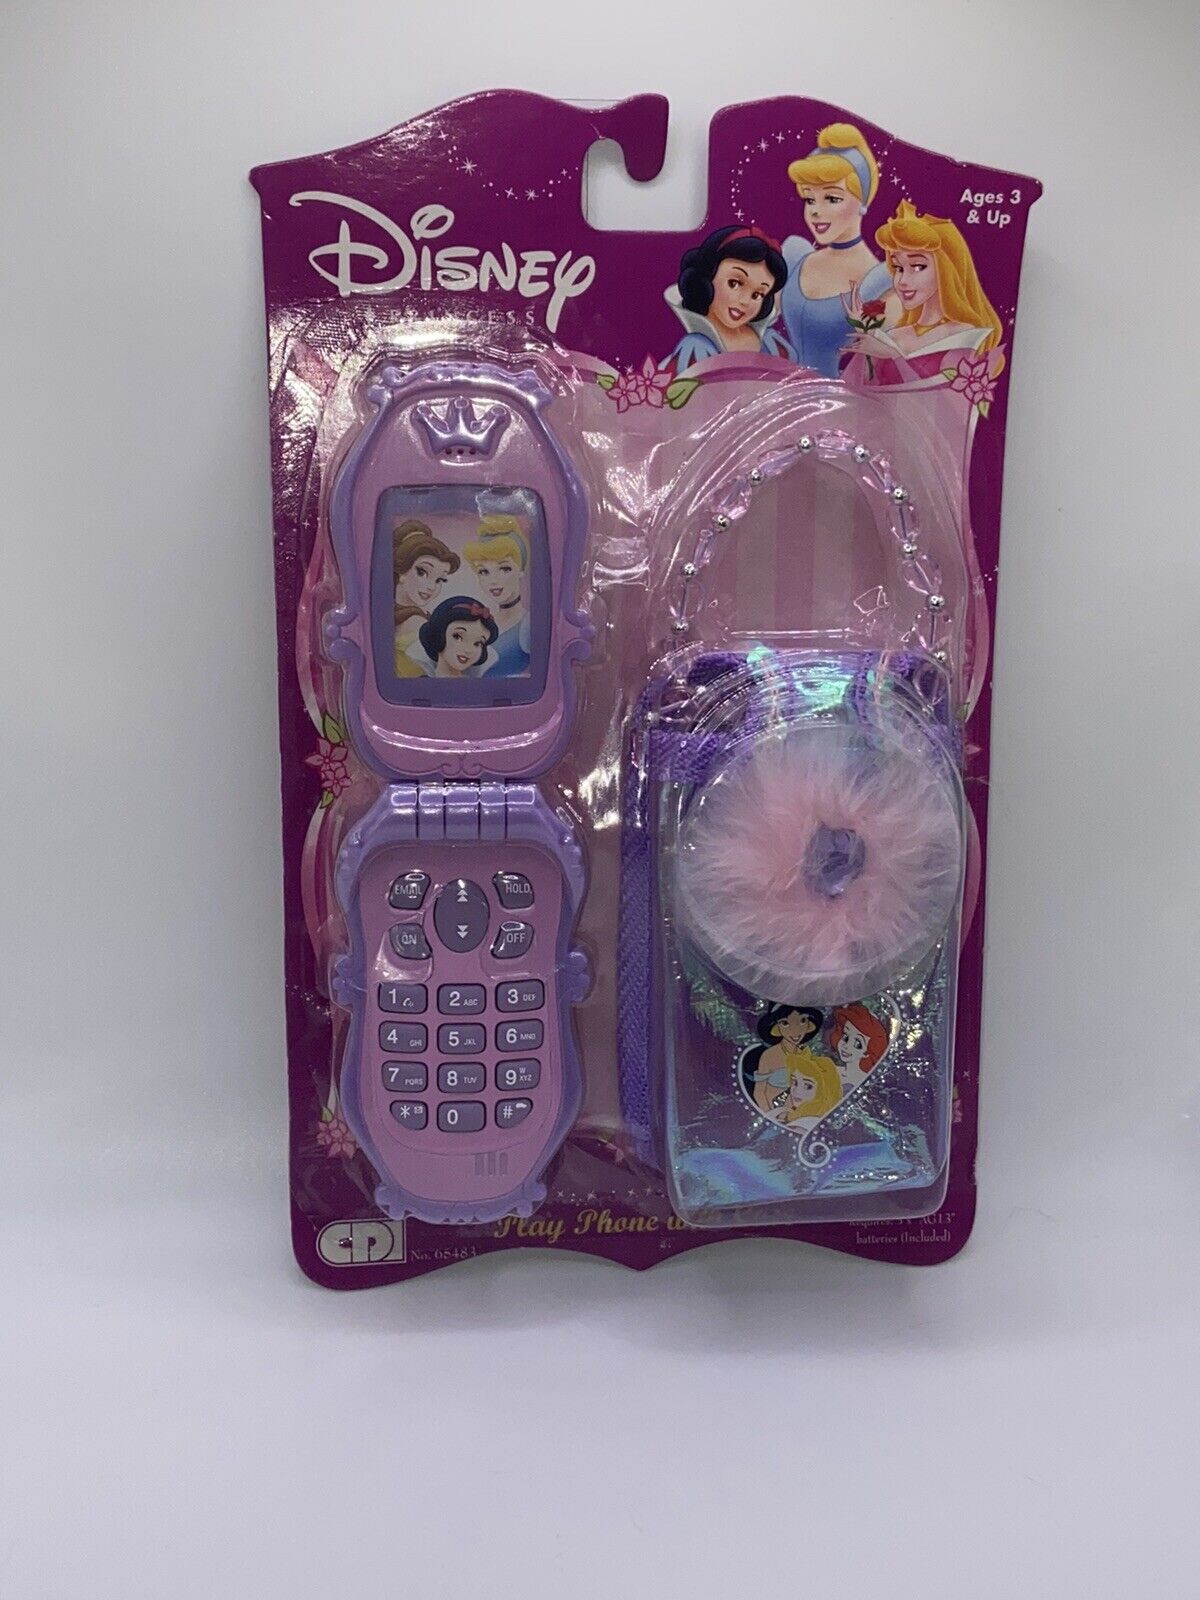 Disney Princess Play Phone w/Cinderella 2006 NEW Sealed Disney Princesses